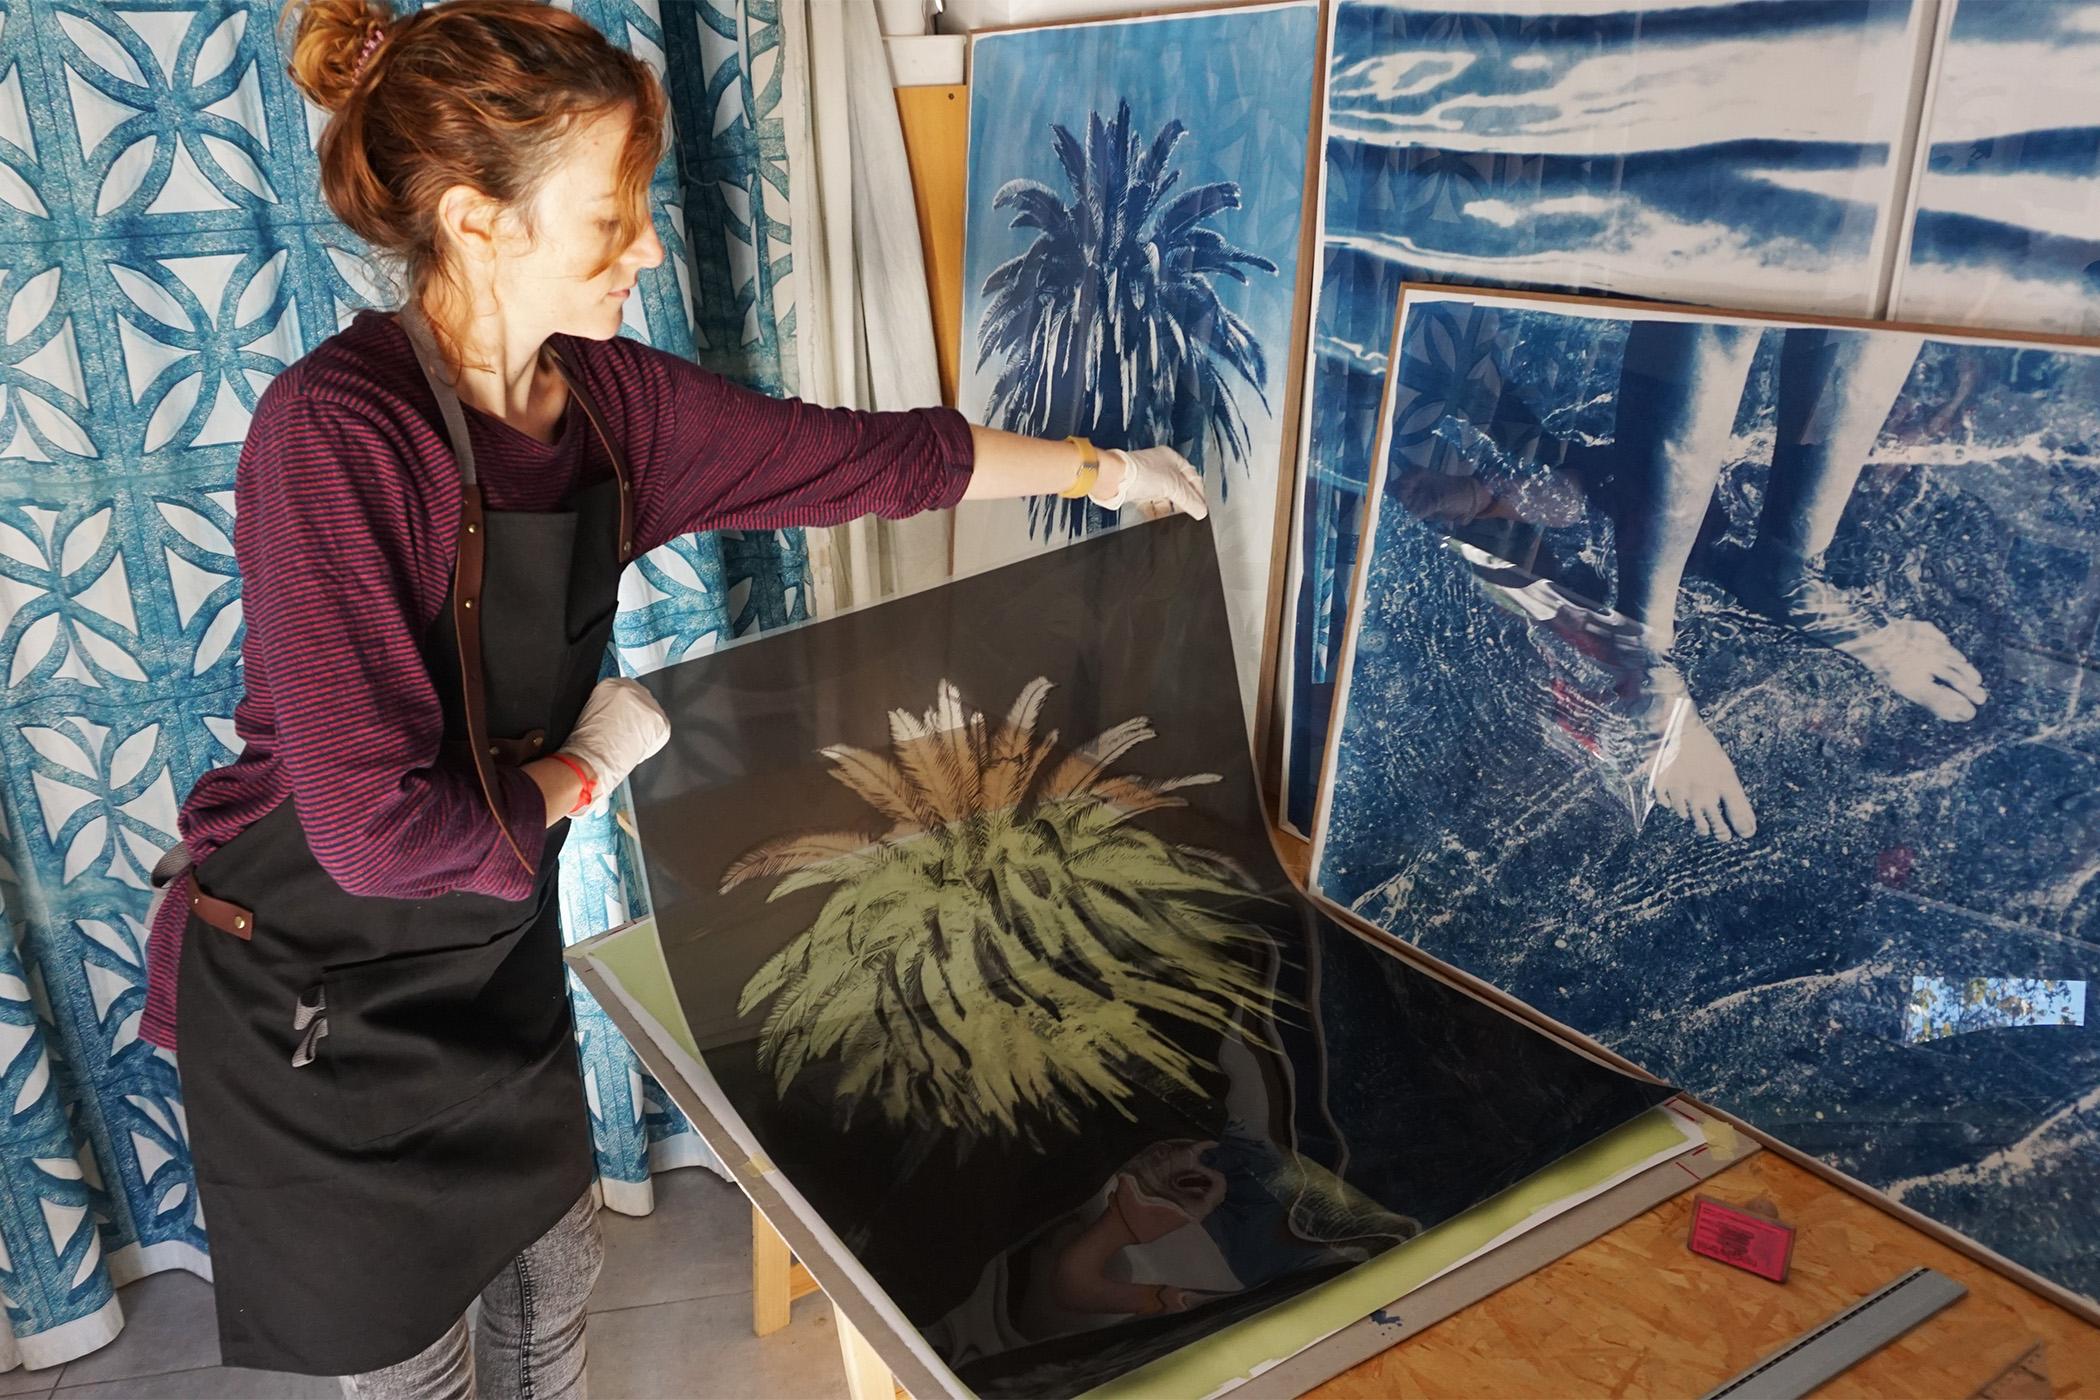 Blue Upright Desert Cactus, Extra Large Cyanotype Print in ColdTones, Botanic 3